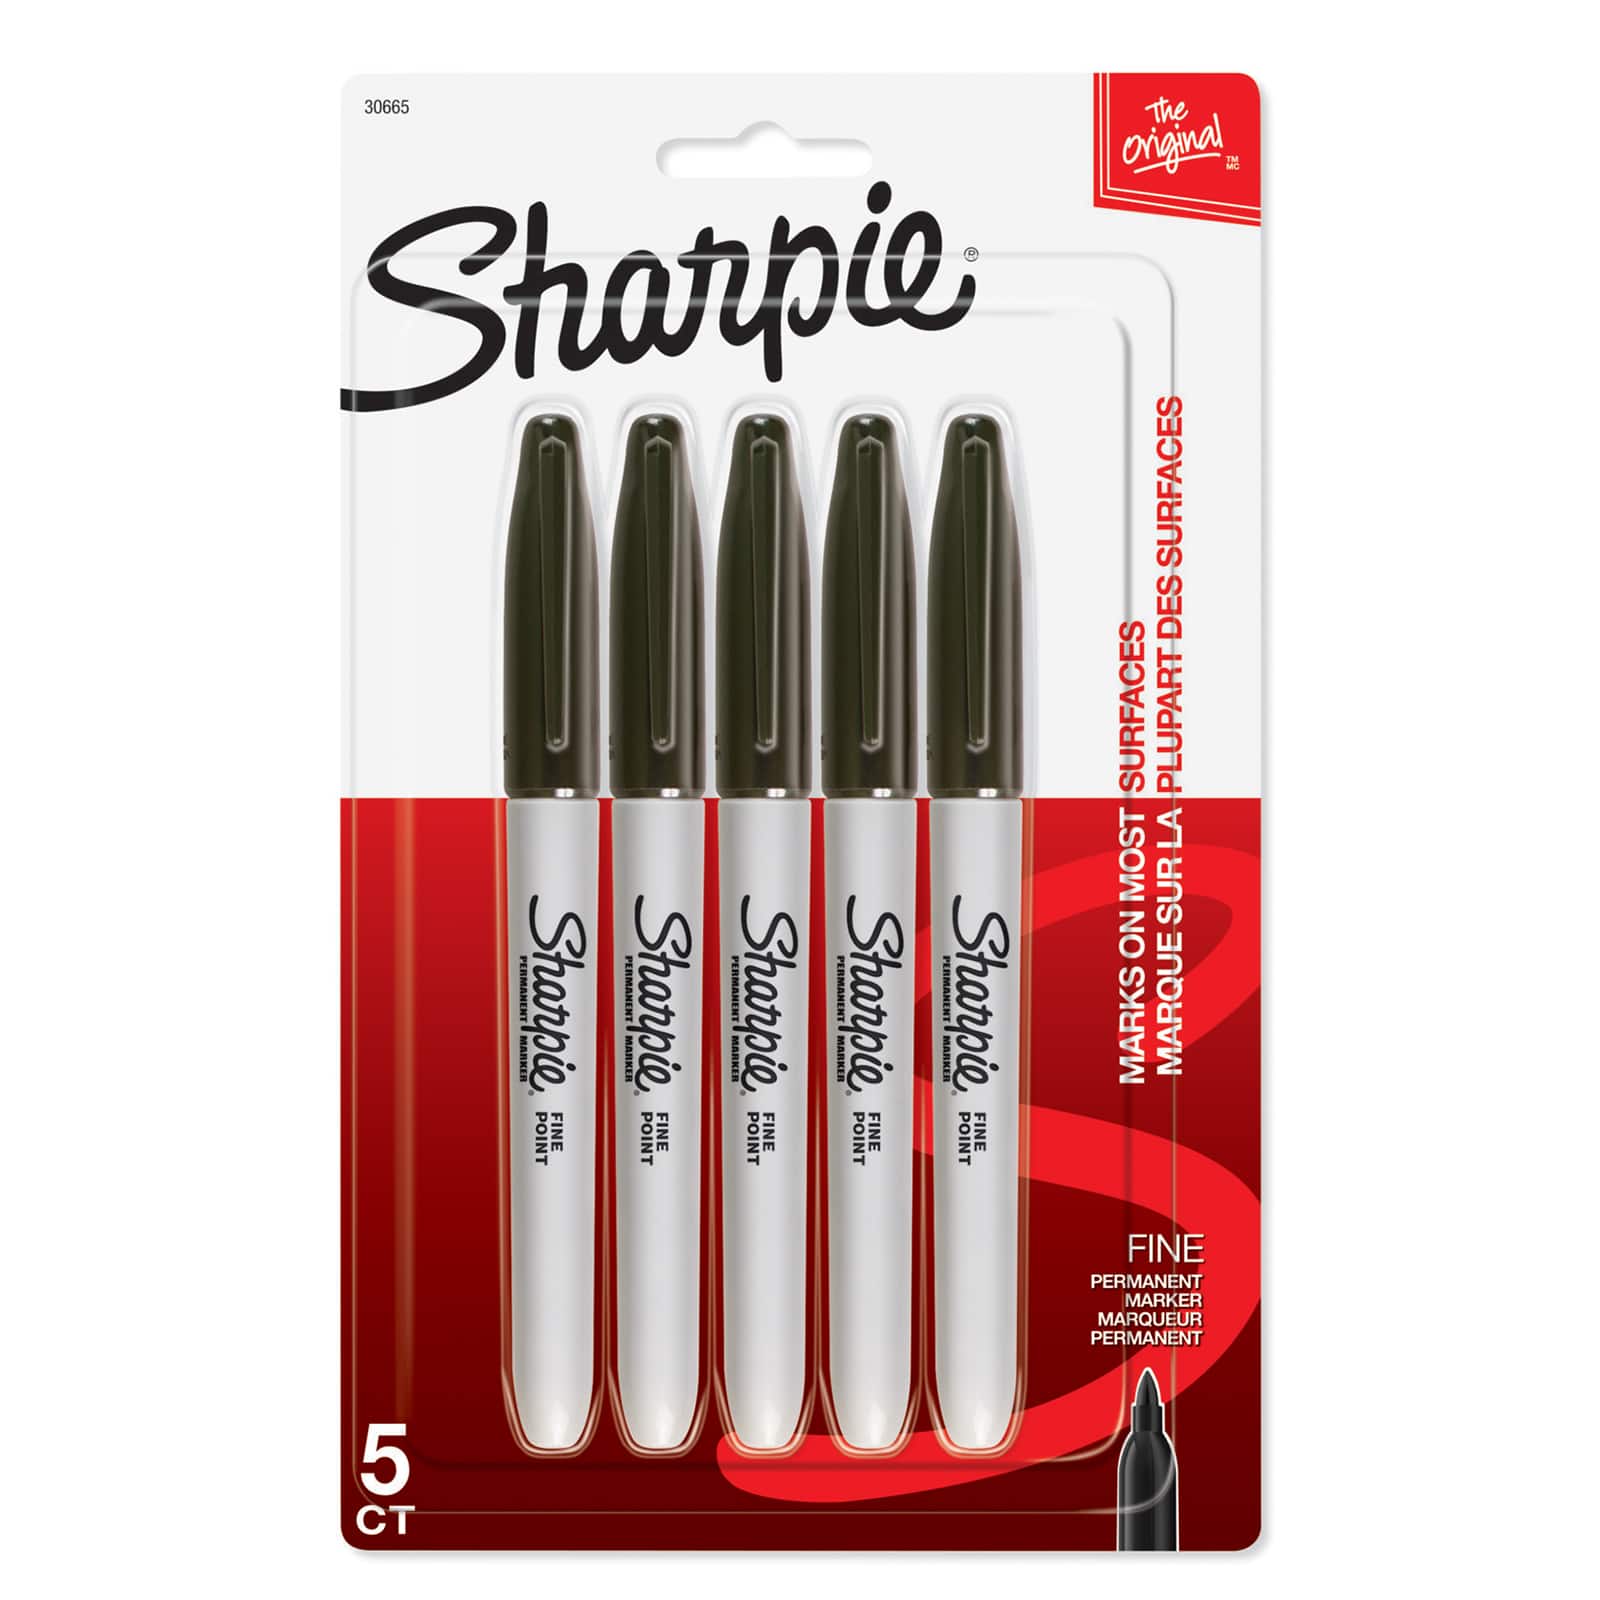 Sharpie Pen-style Permanent Marker - Fine Marker Point - Black